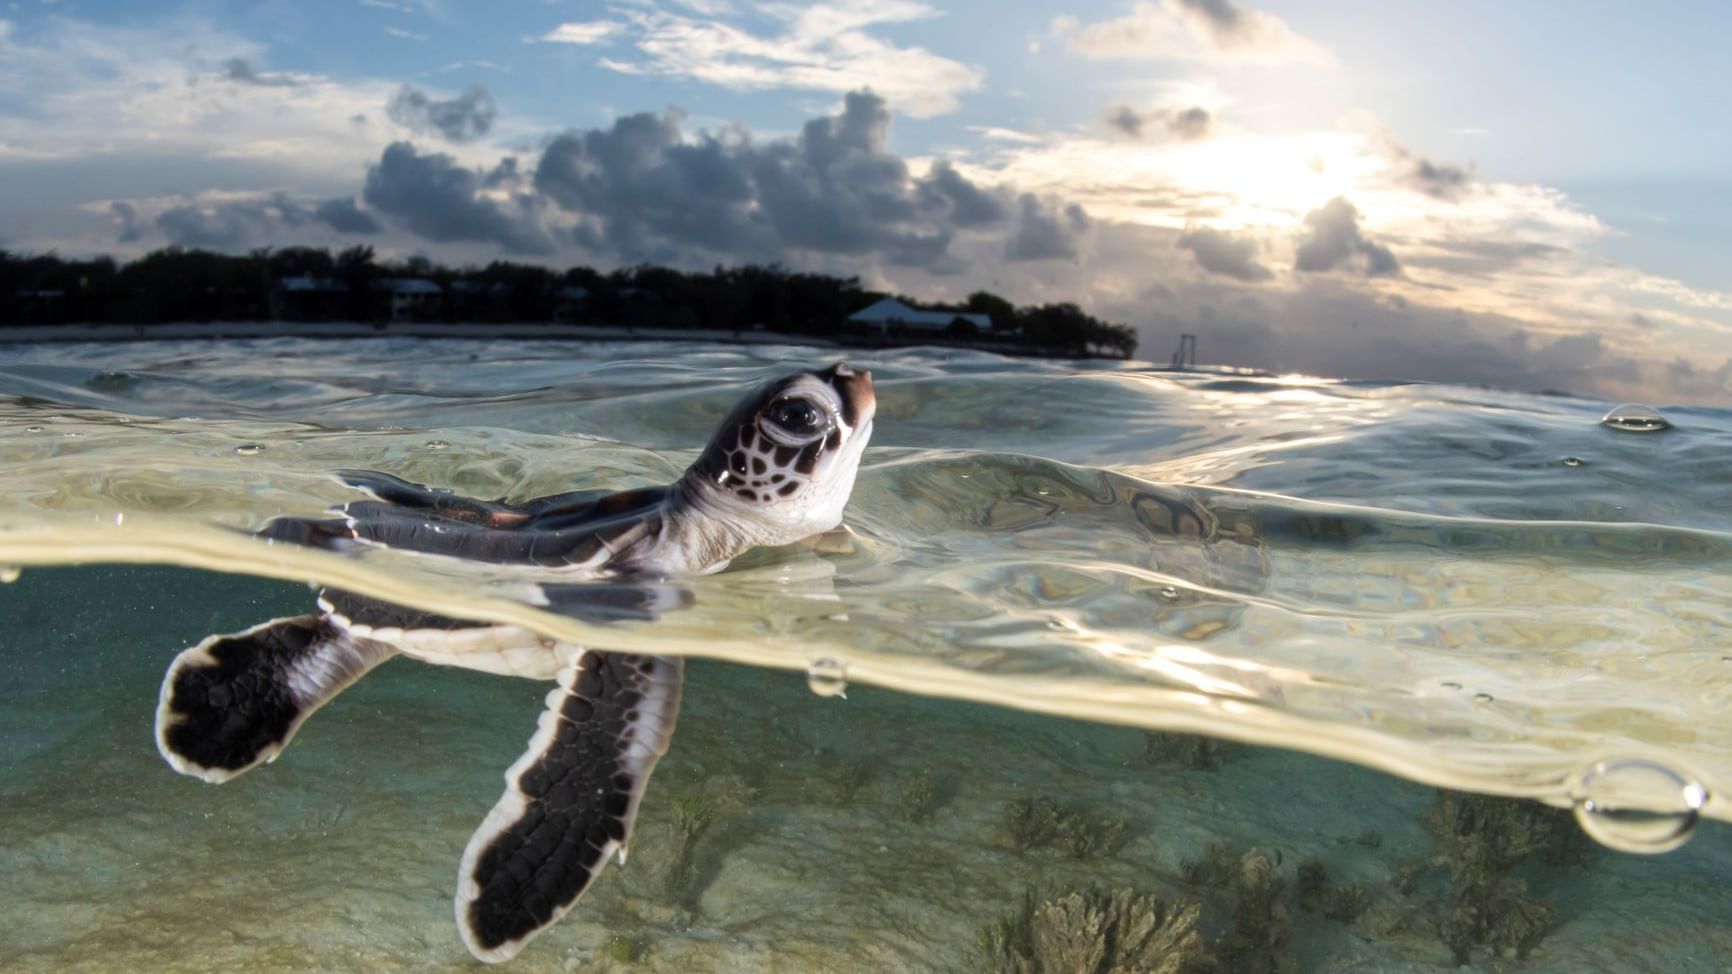 Baby turtle swimming on water near Heron Island Resort